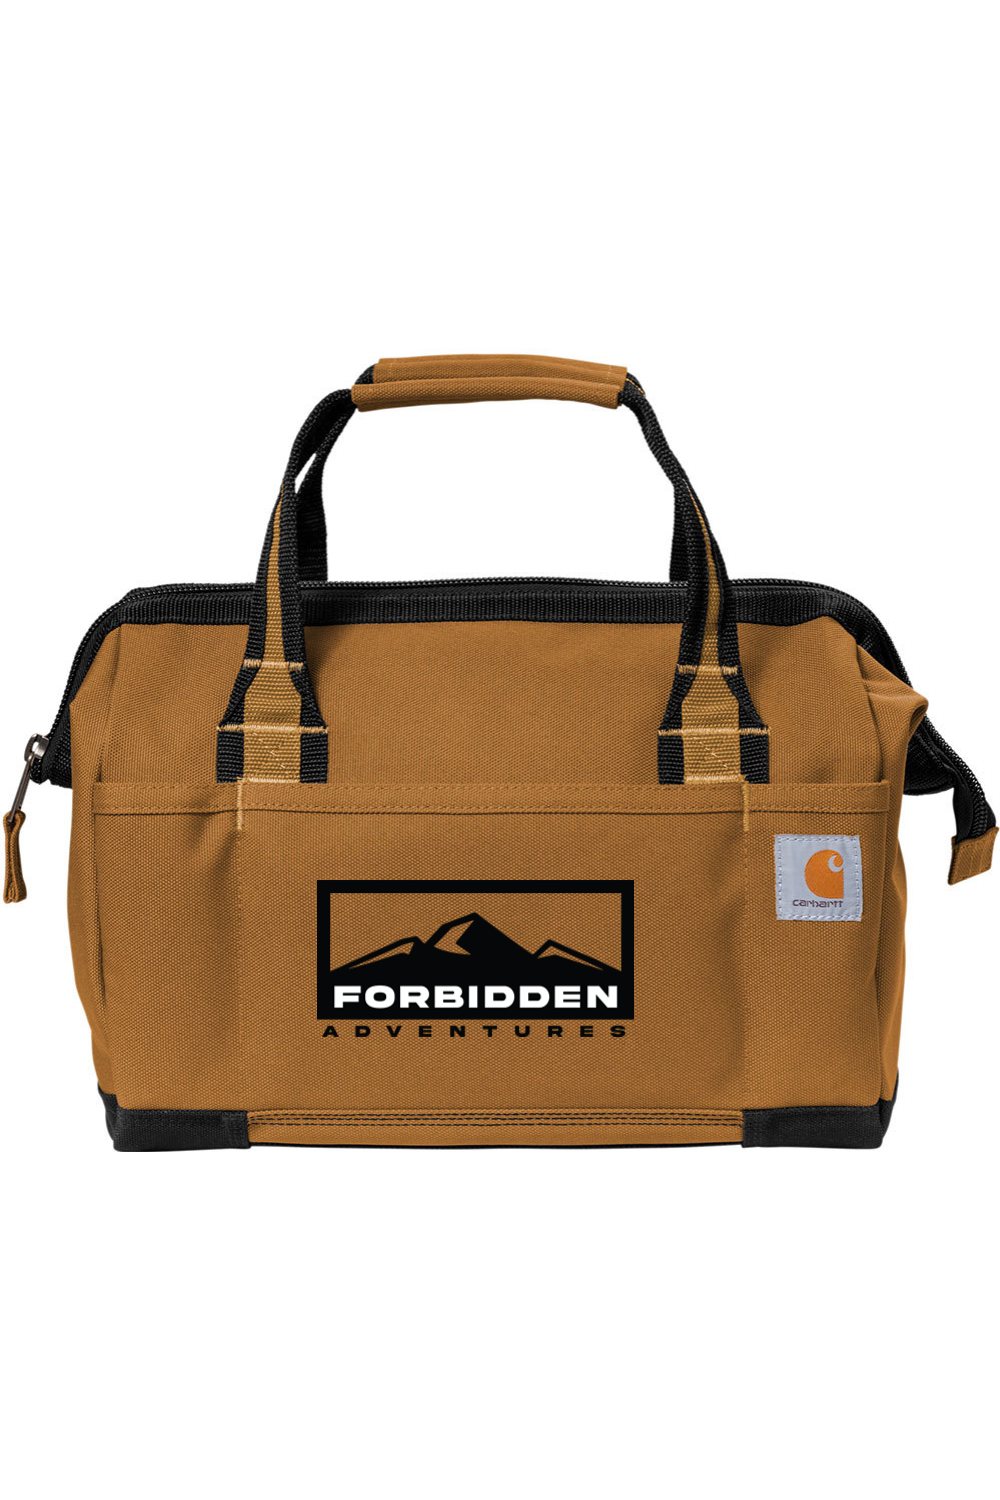 Foundry Series 14" Tool Bag